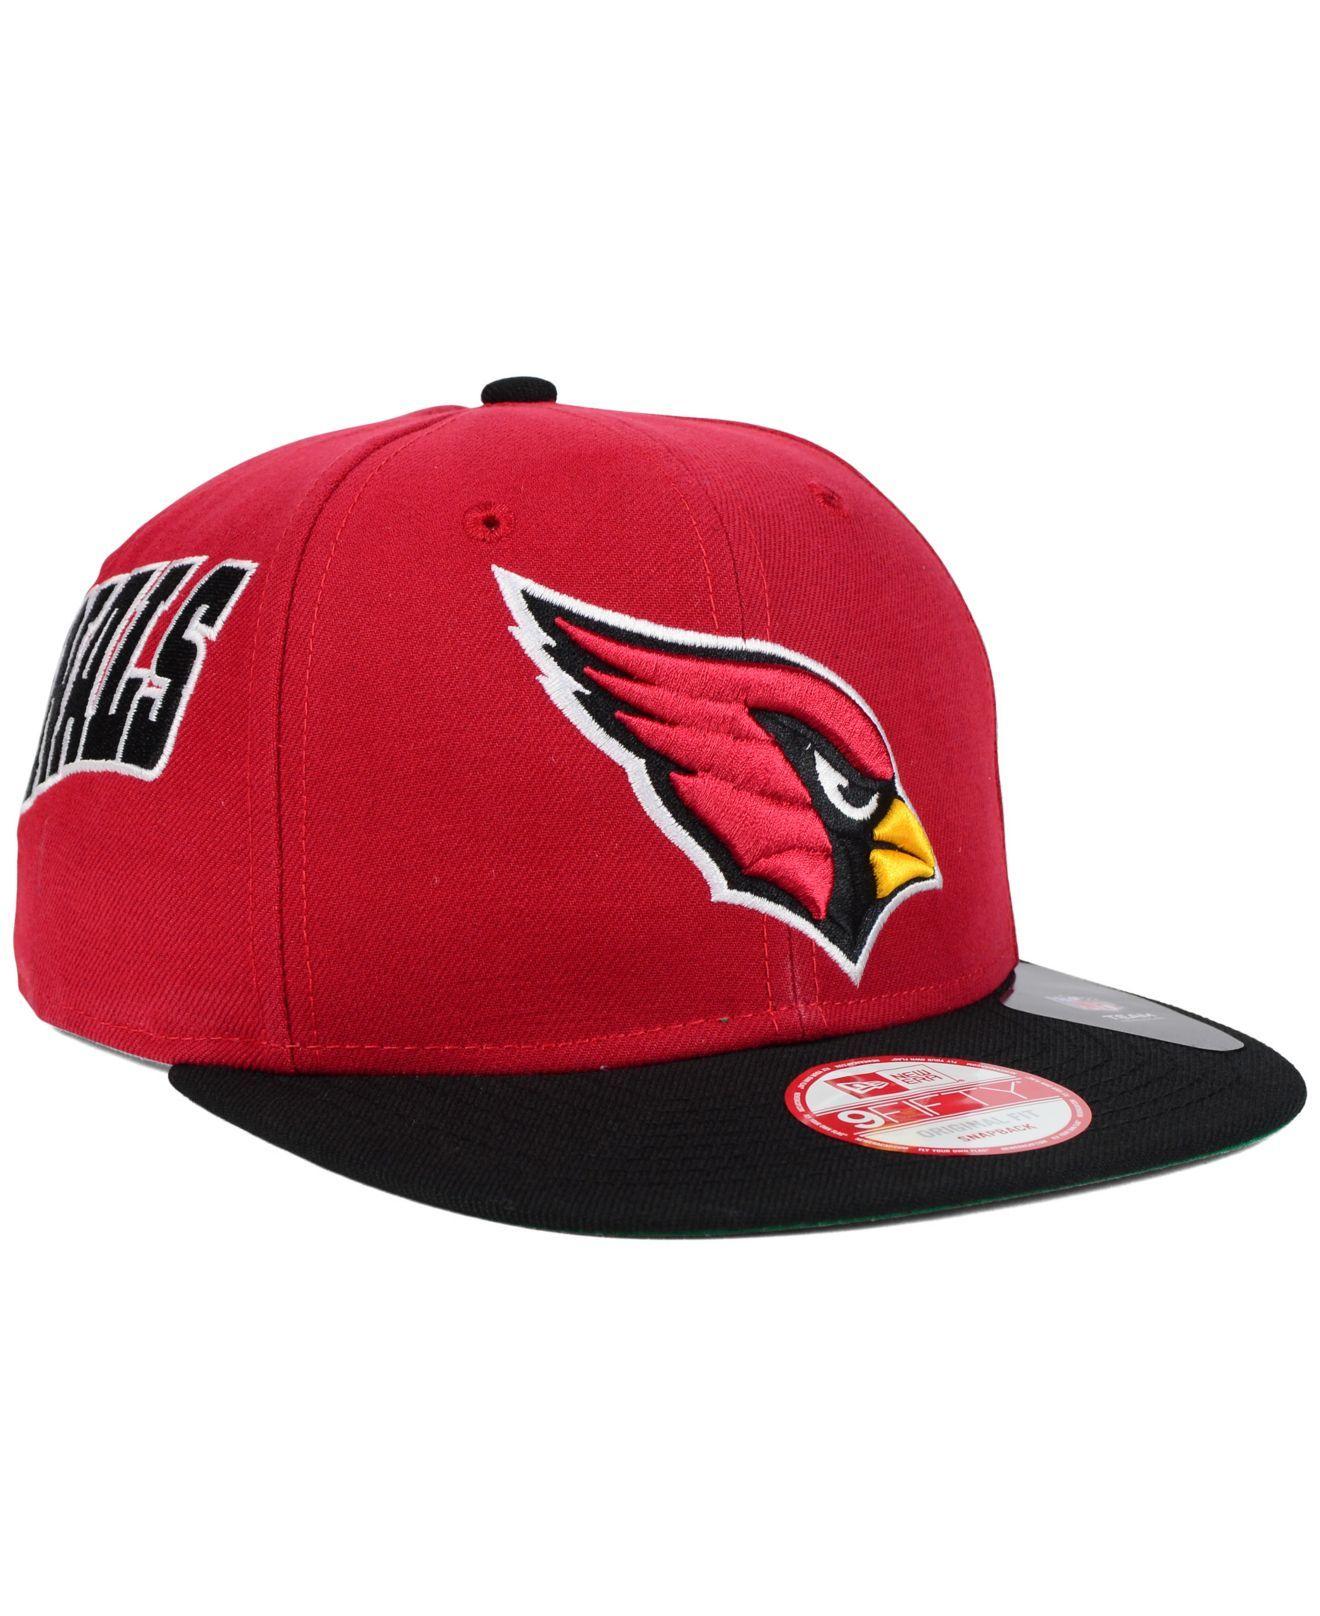 Red Swerve Logo - Lyst Arizona Cardinals Swerve 9fifty Snapback Cap